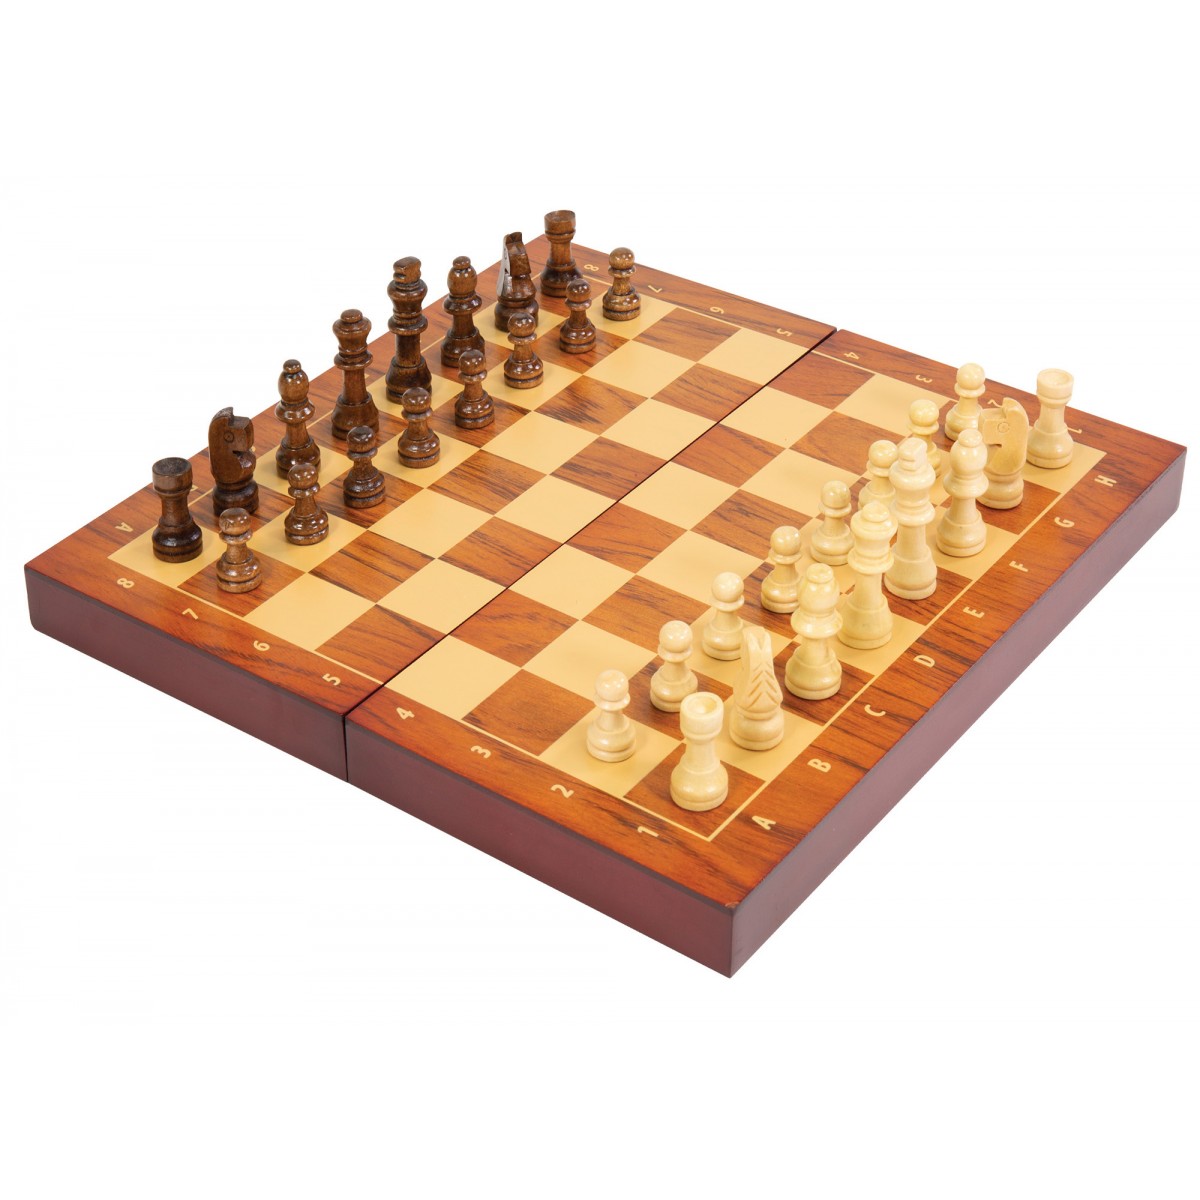 29x29cm Premium Folding Wood Chess Set Built in Storage & Round Extra Pieces